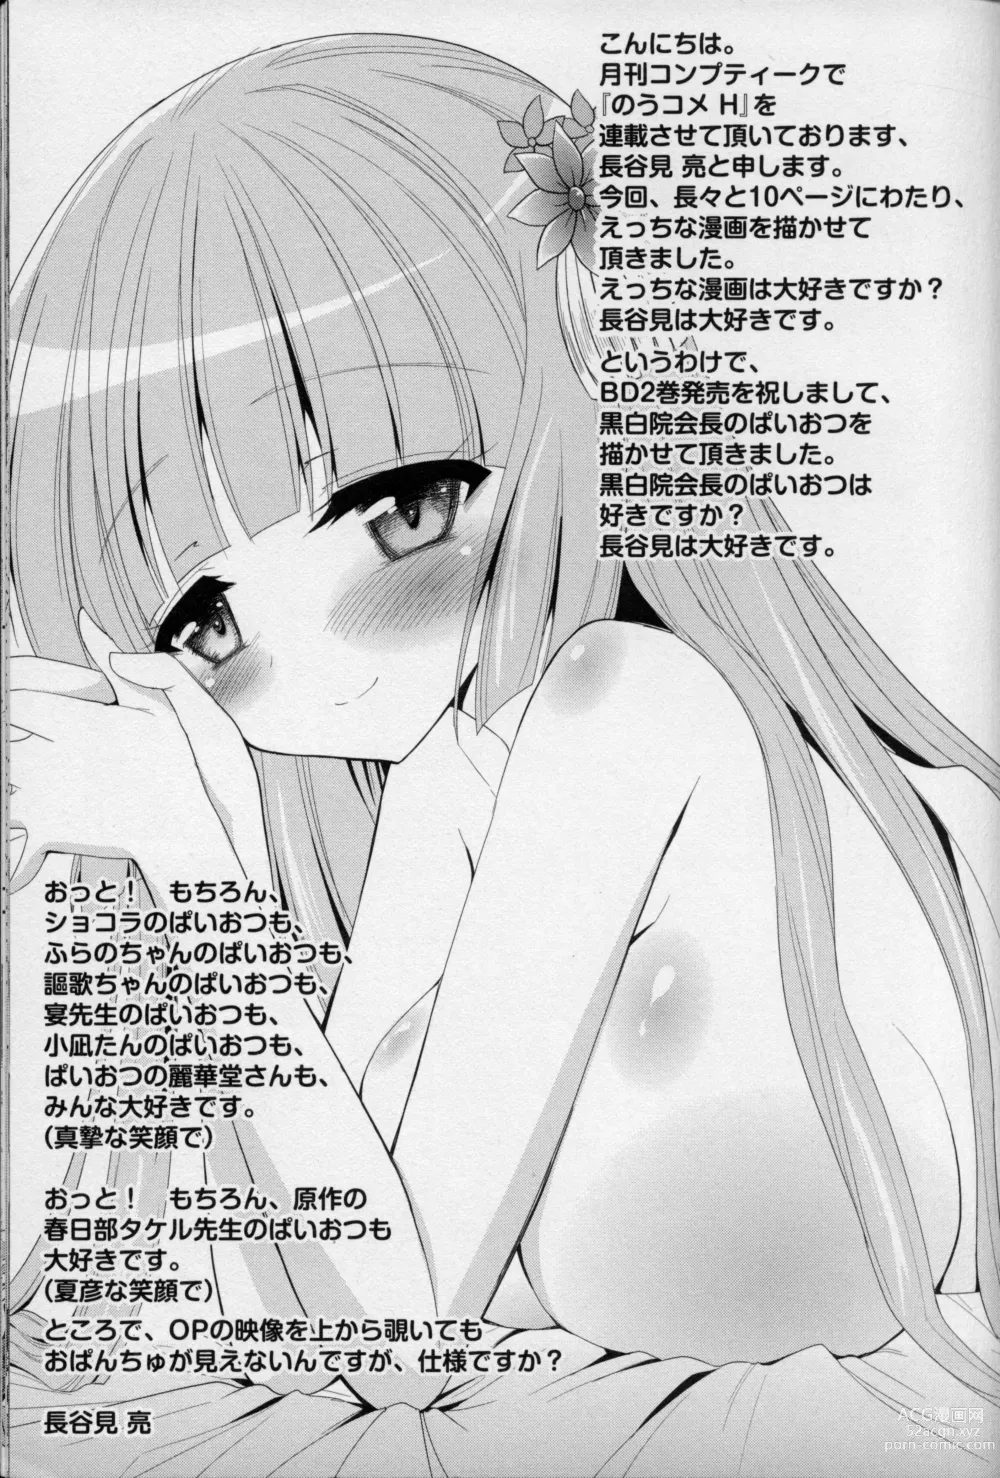 Page 16 of manga 「どっちを選ぶ?」ダブル描き下ろしコミックス Blu-ray＆DVD 第2巻 同梱特典